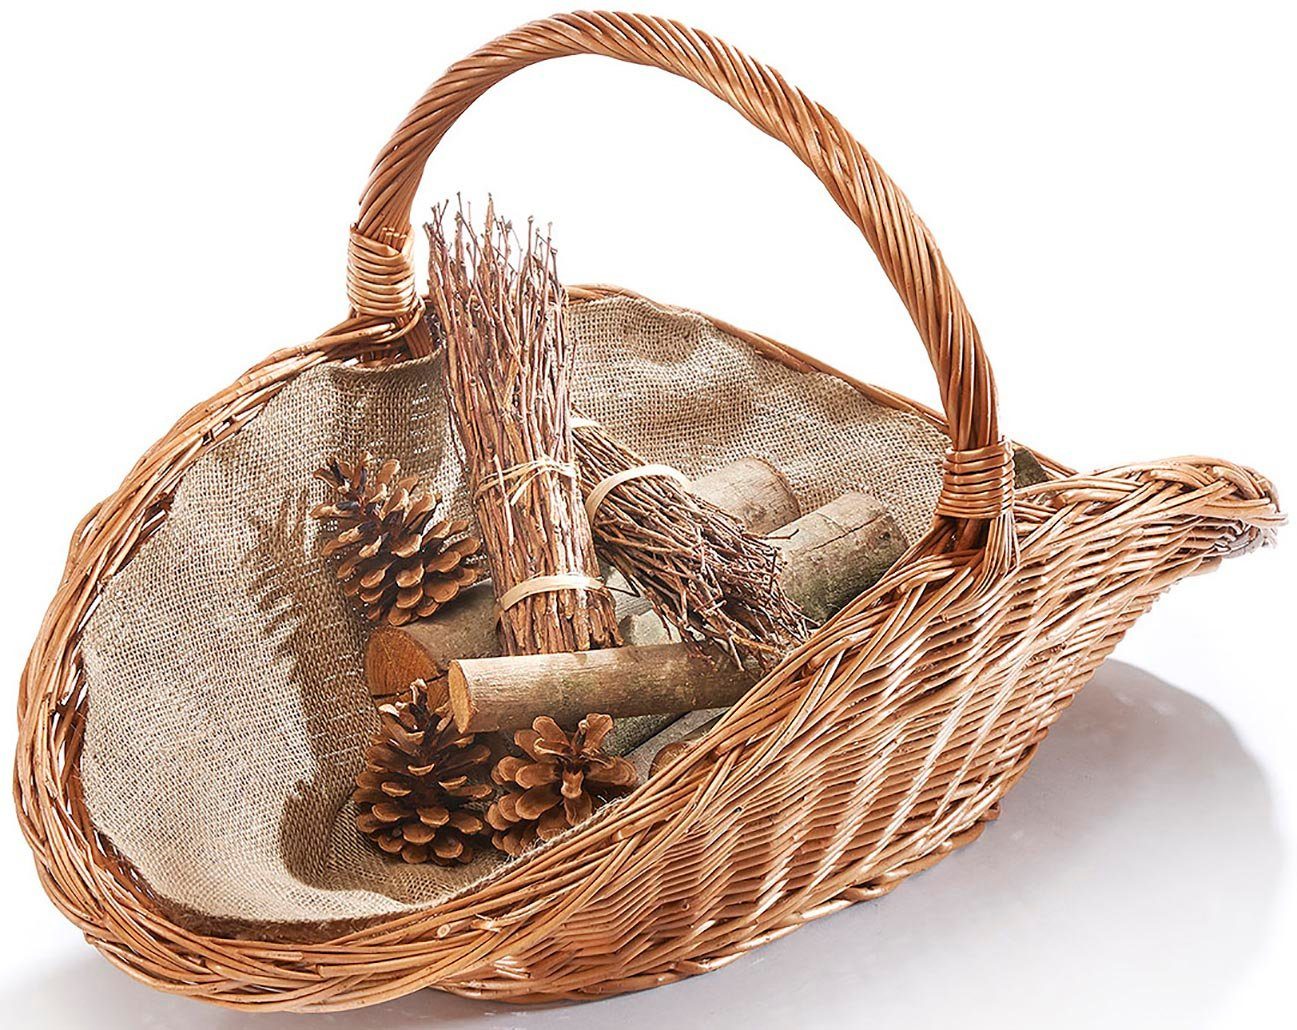 Kobolo Kaminholzkorb Holztrage mit gekochter Weide Leinen oval aus